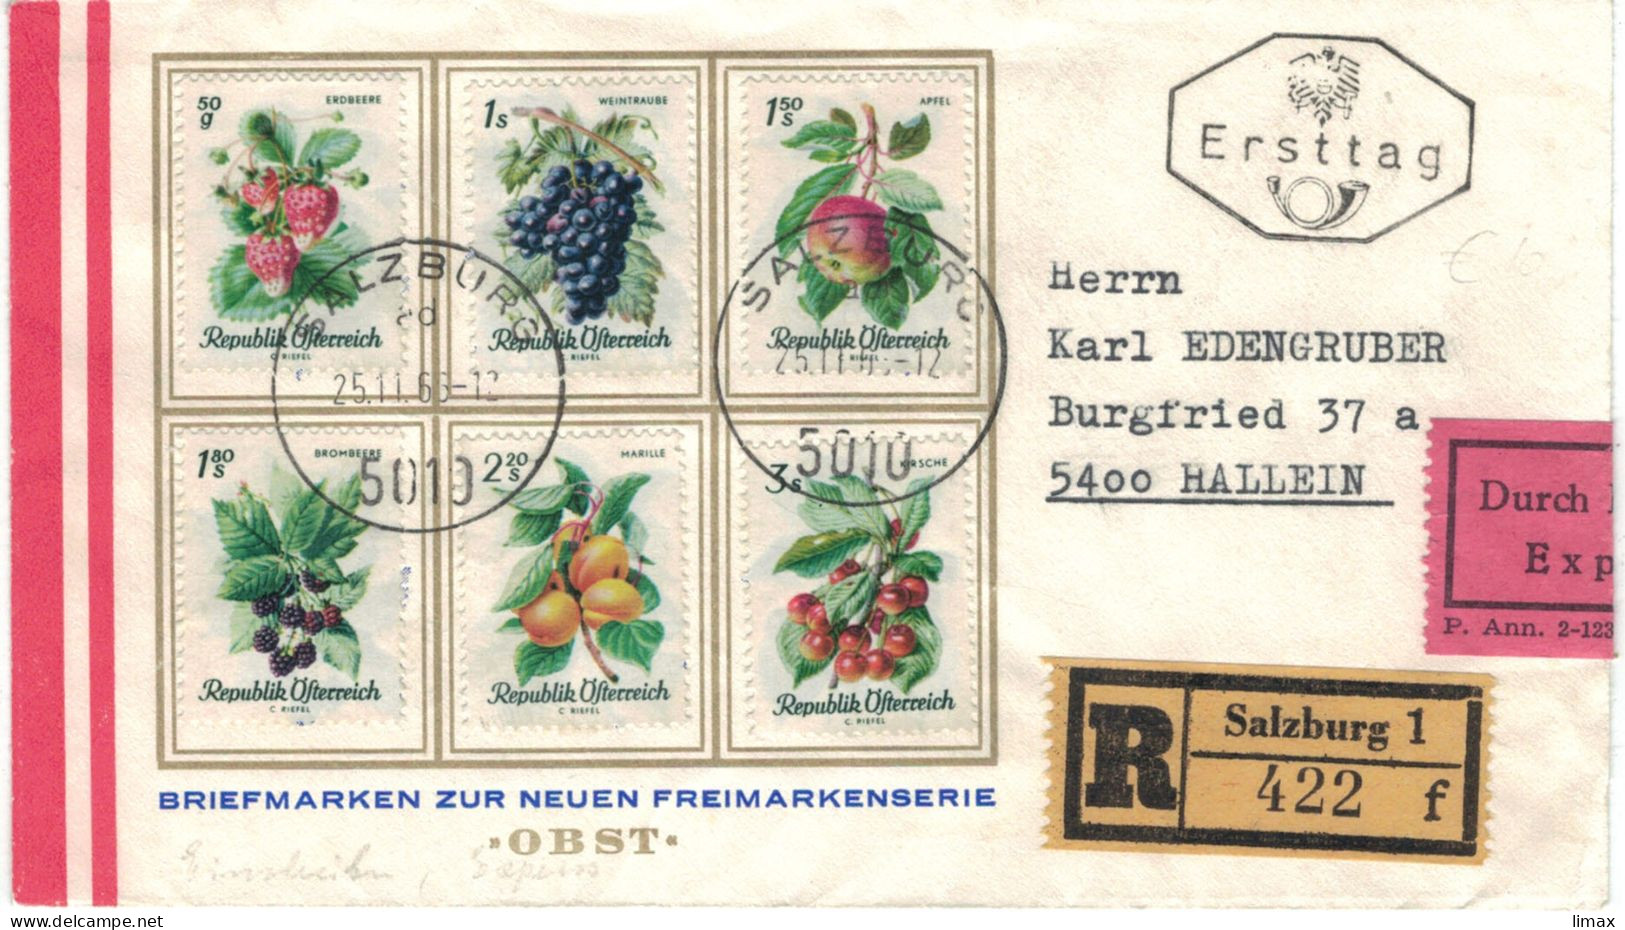 Reko Express Salzburg 1966 > Hallein - Obst Erdbeere Traube Apfel Brombeere Marille Kirsche - Covers & Documents